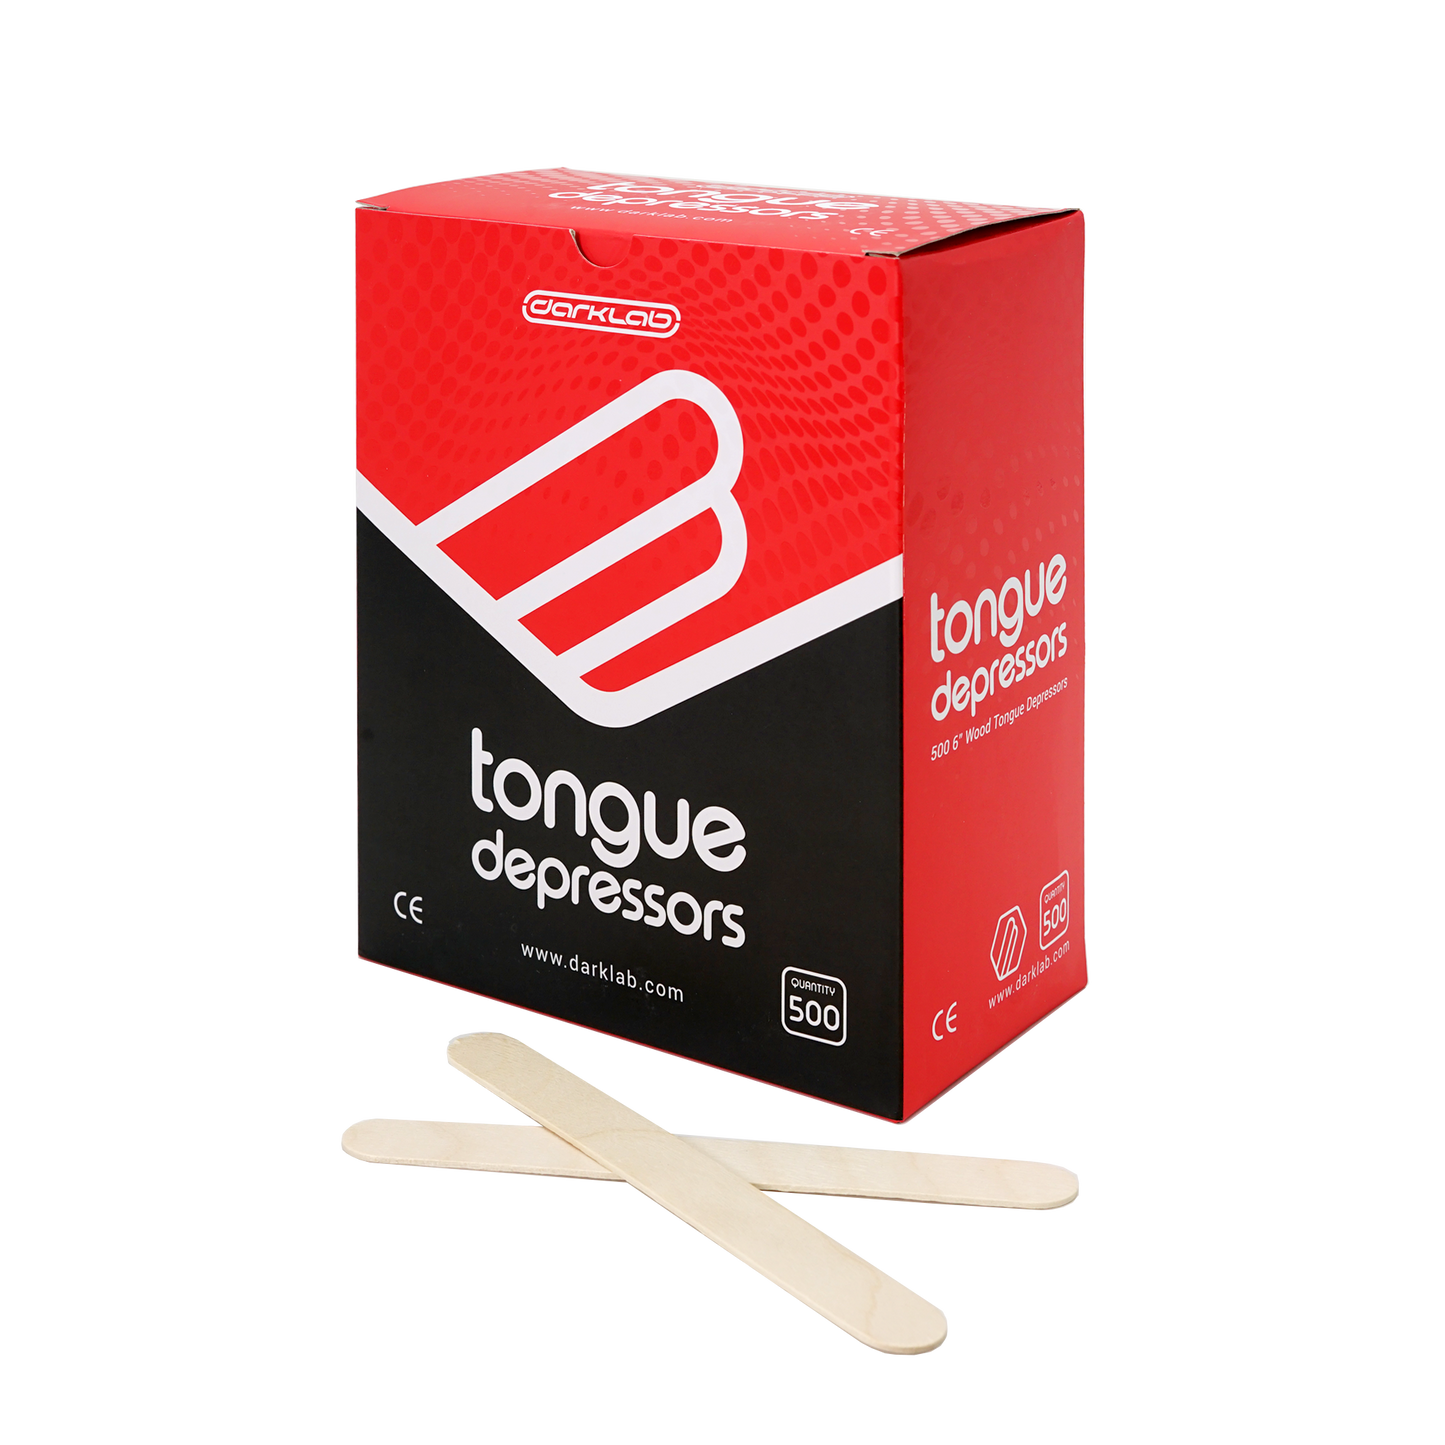 Darklab Tongue Depressors - Box of 500